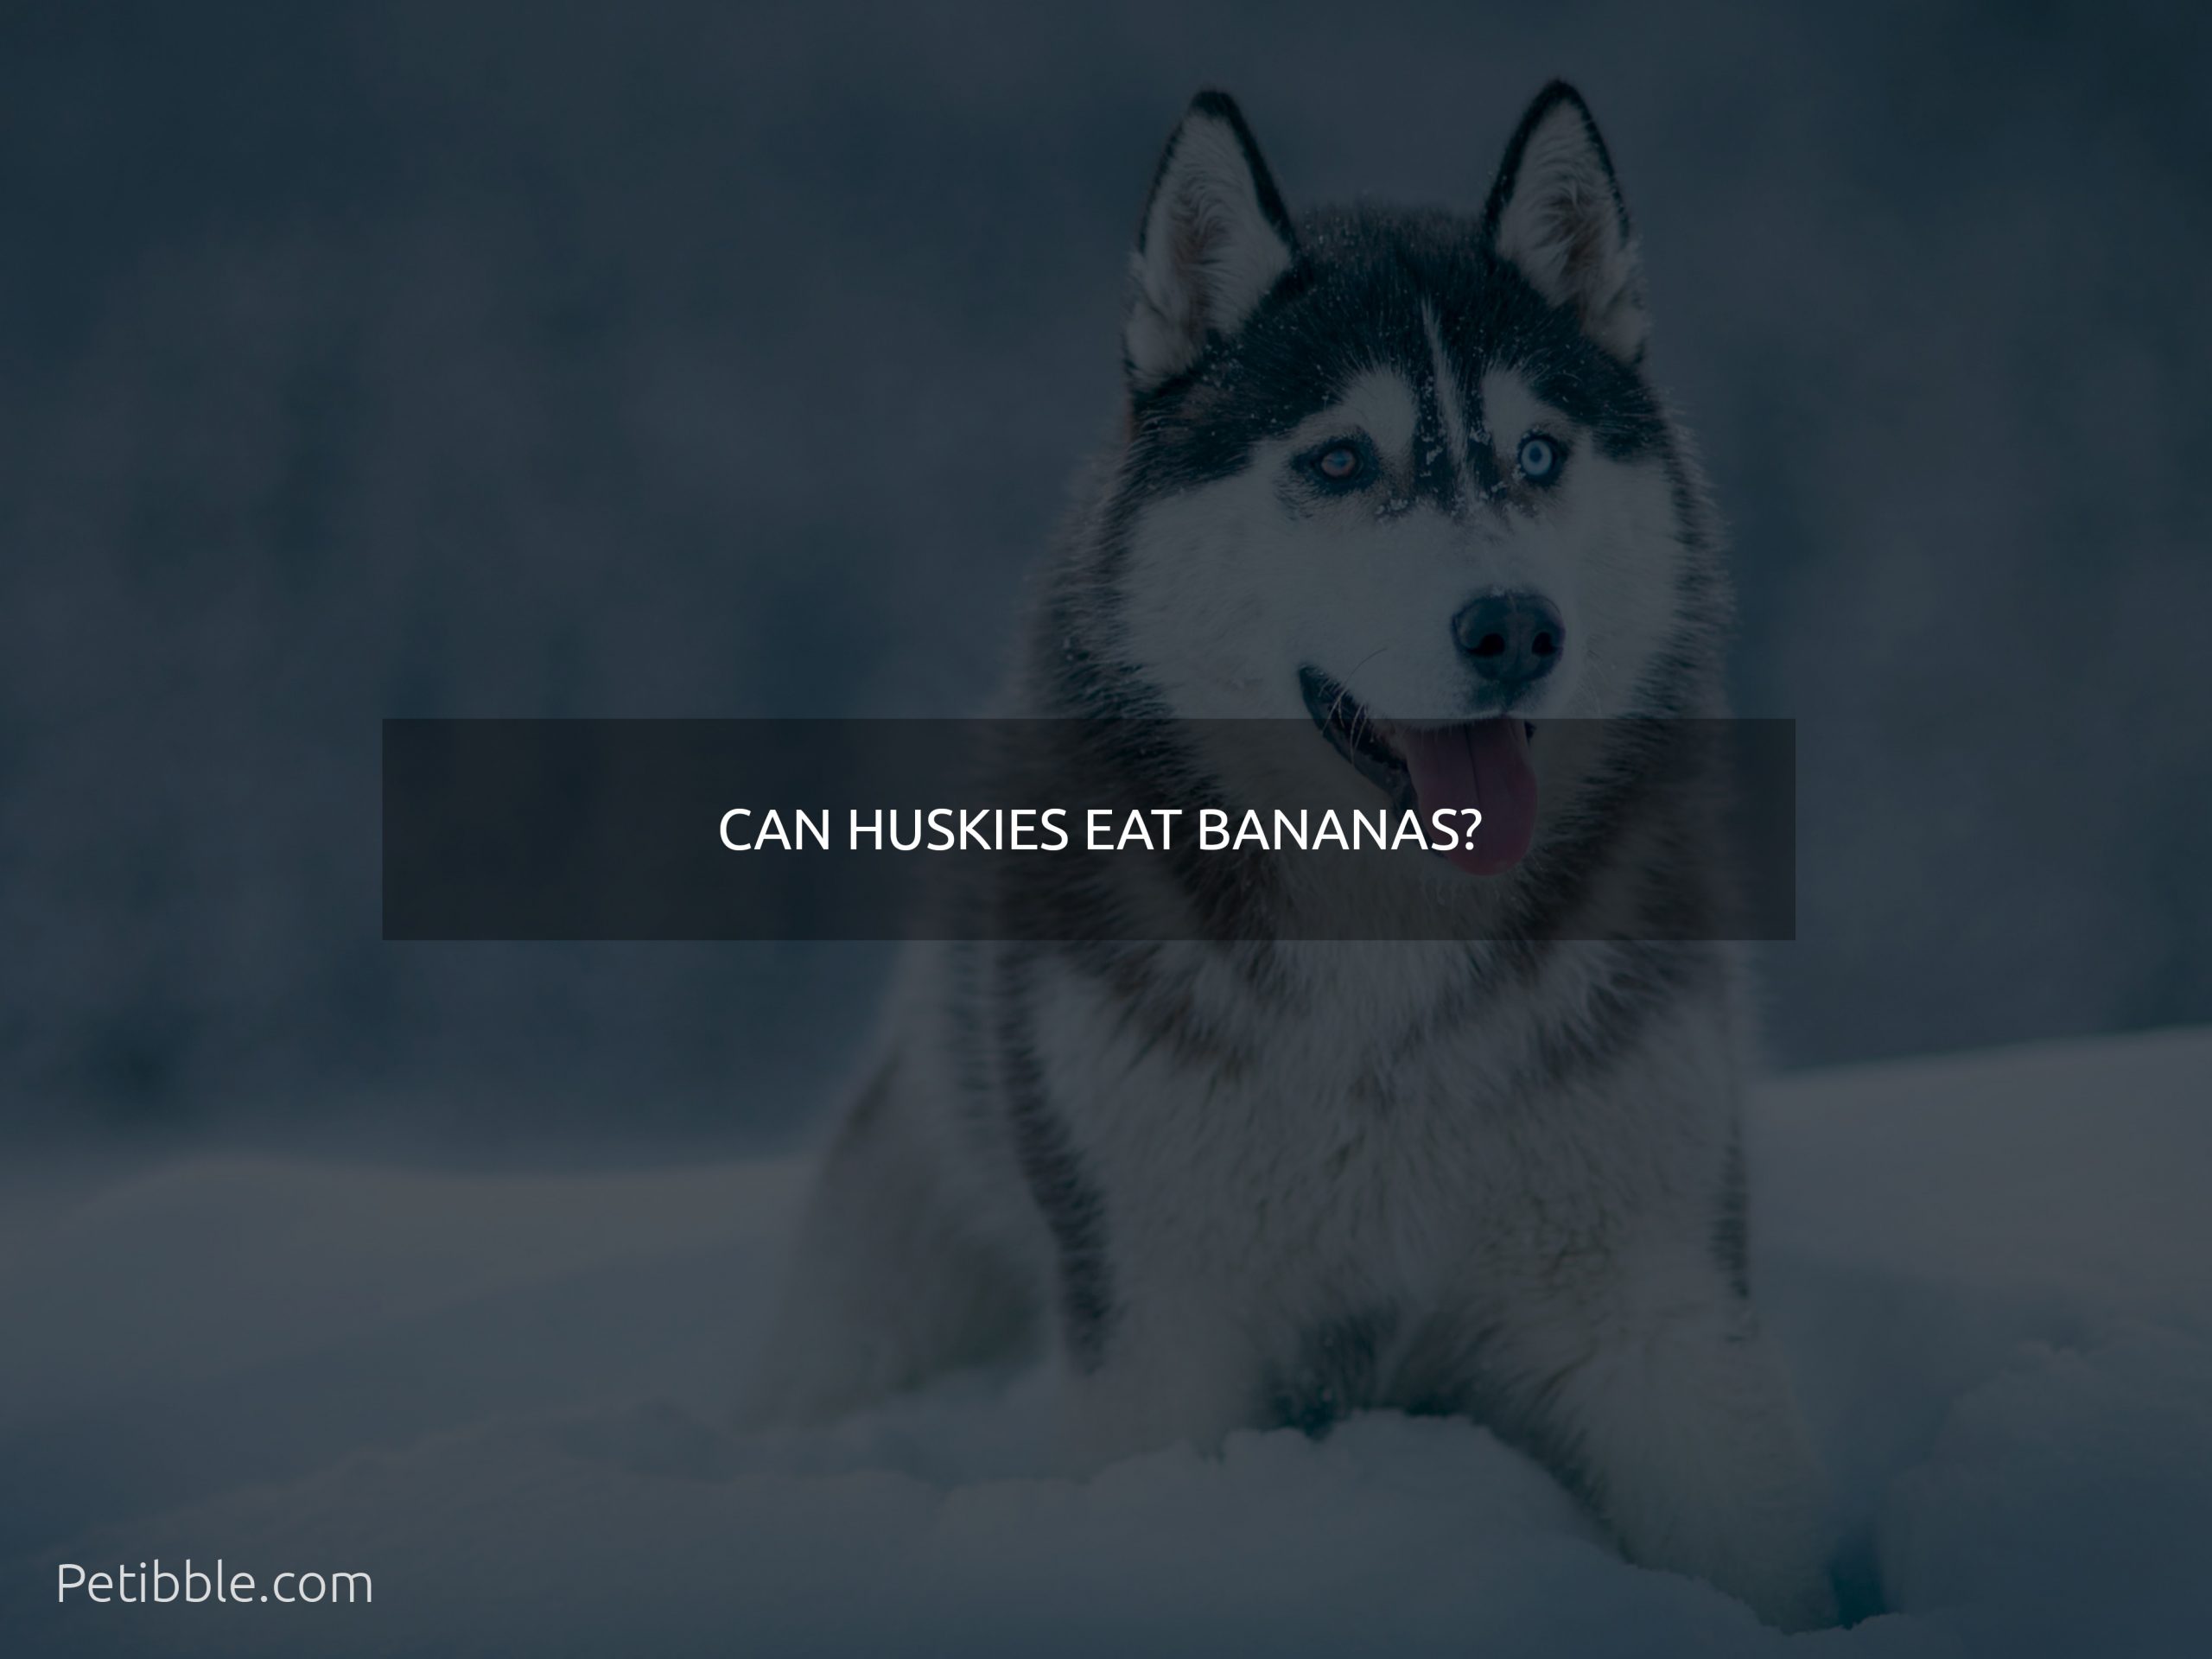 Can Huskies eat bananas?